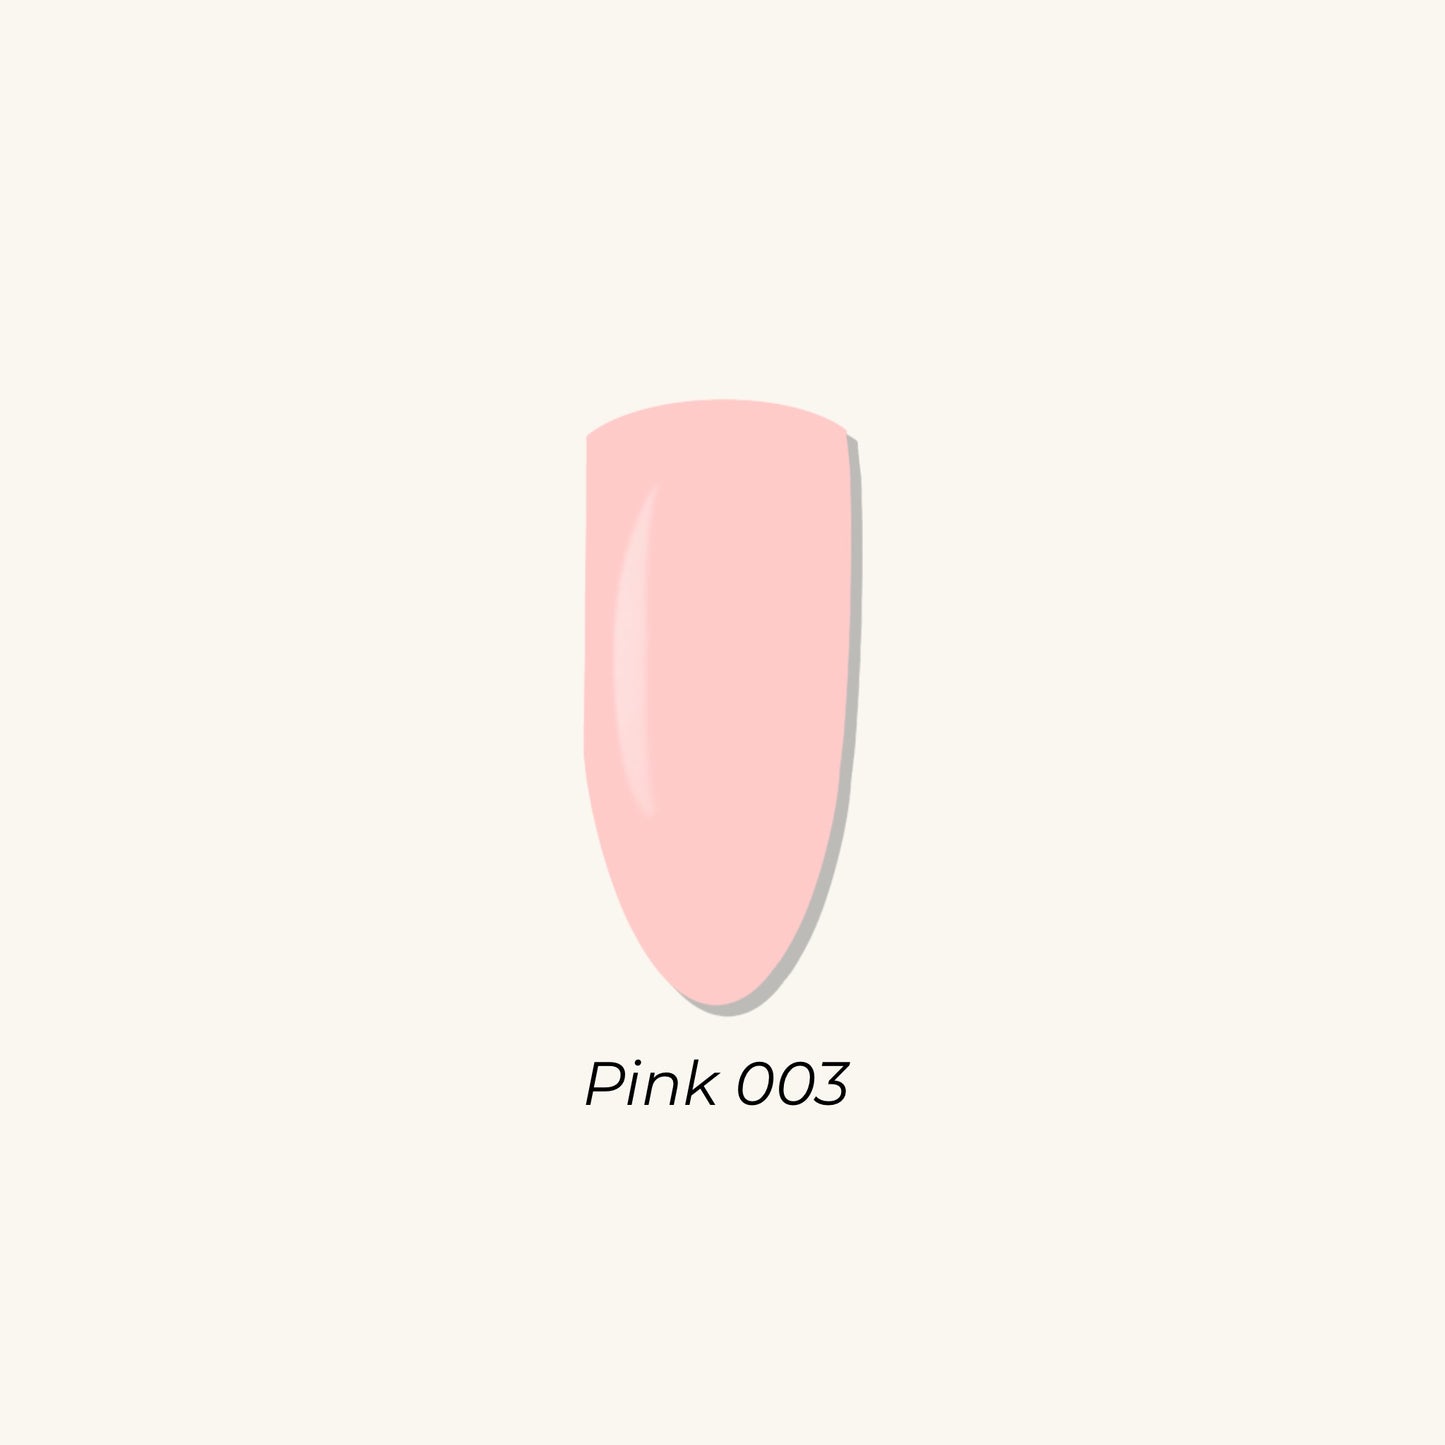 Pink 003